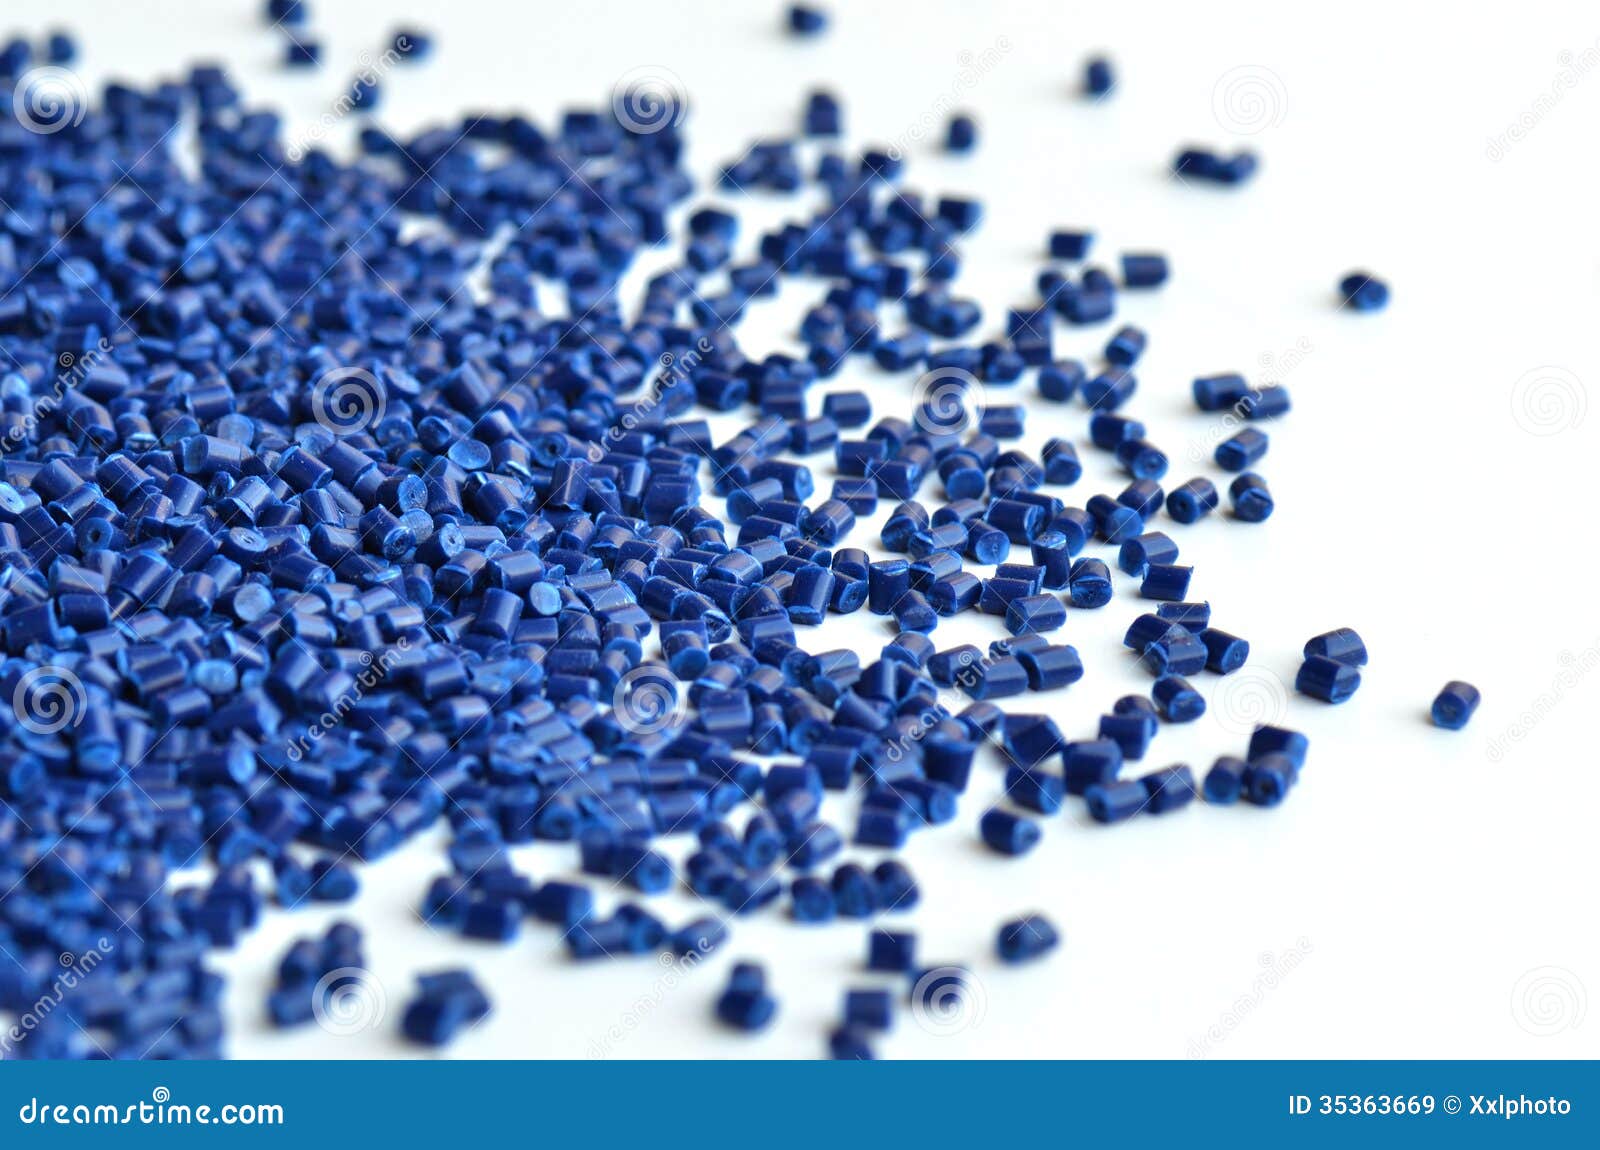 deep blue polymer resin